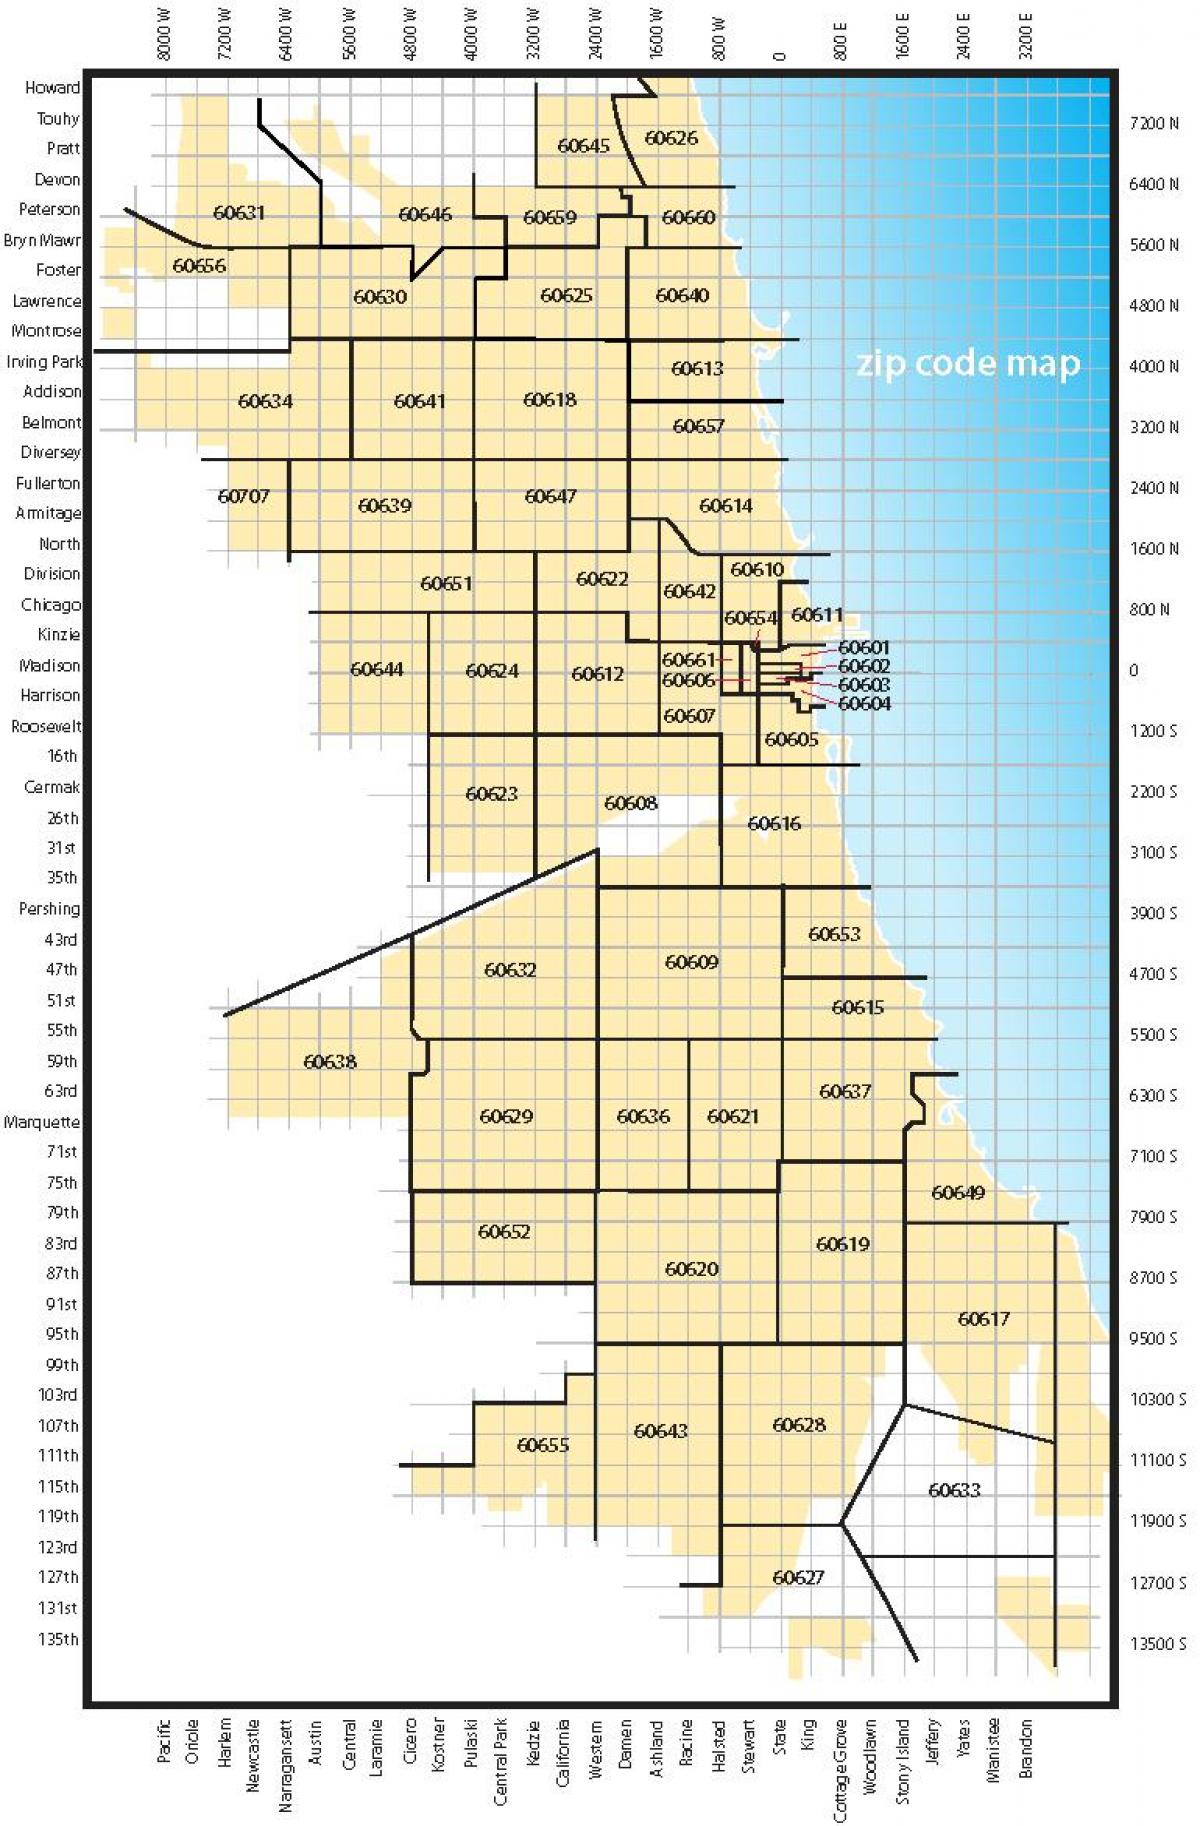 Chicago area code mapu